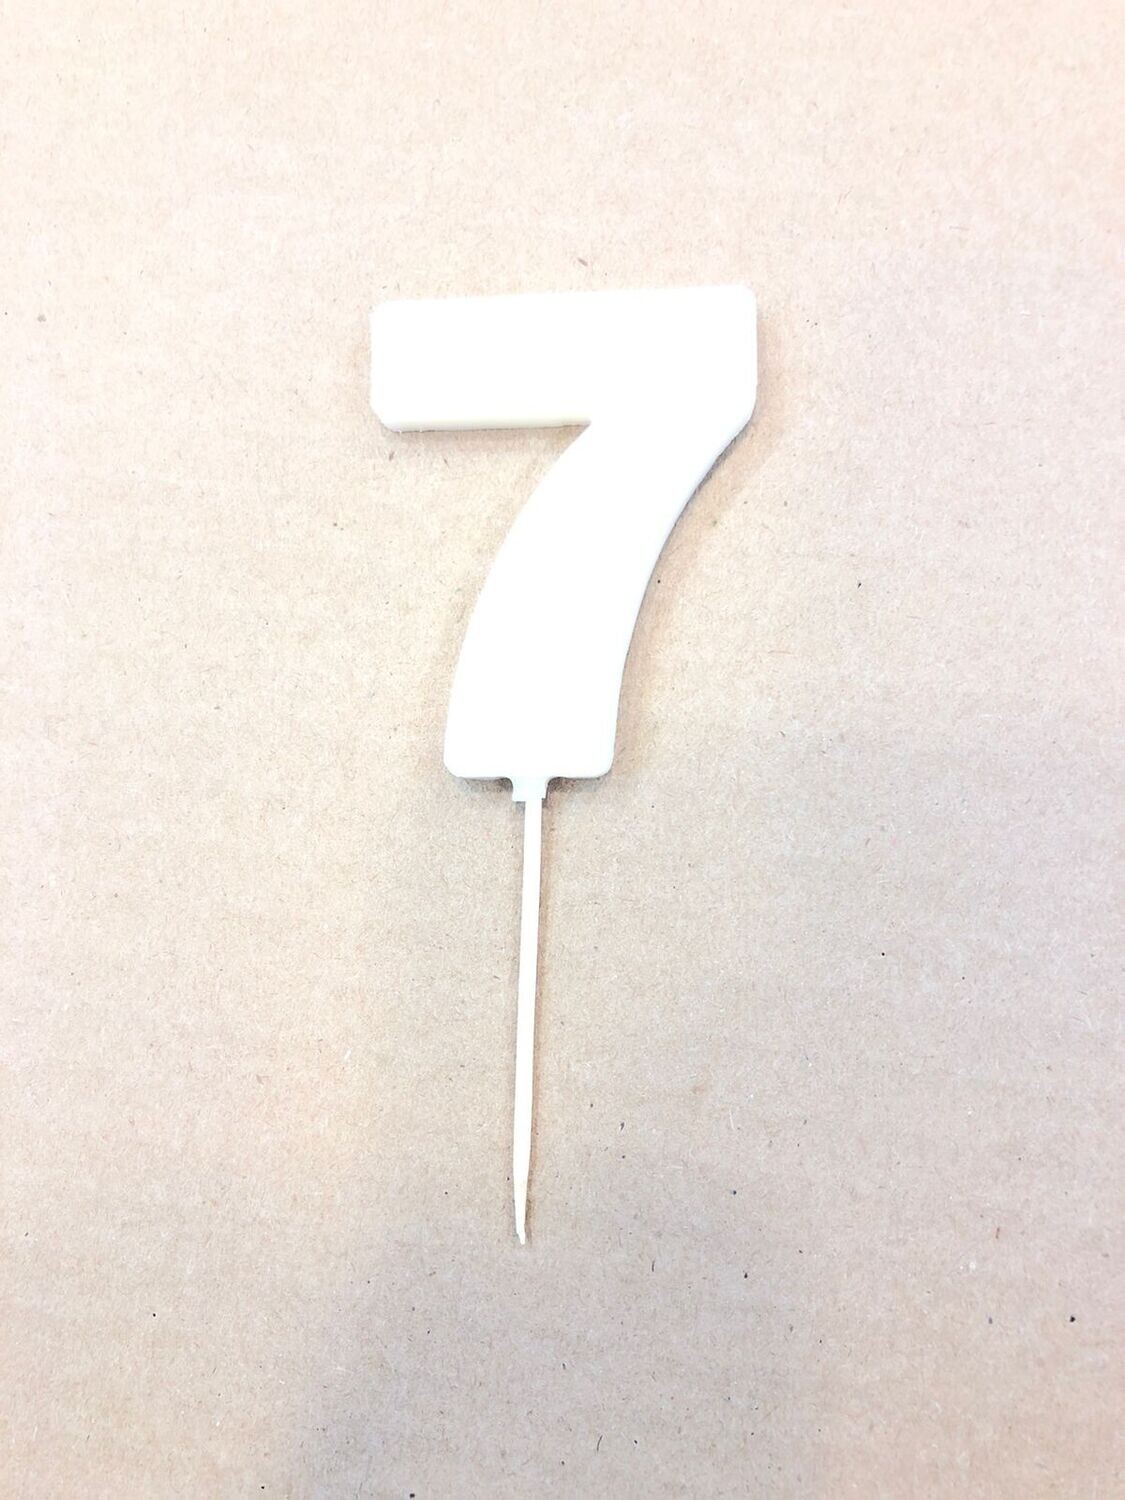 Цифра 7 из шоколадной глазури на шпажке, высота цифры 5 см